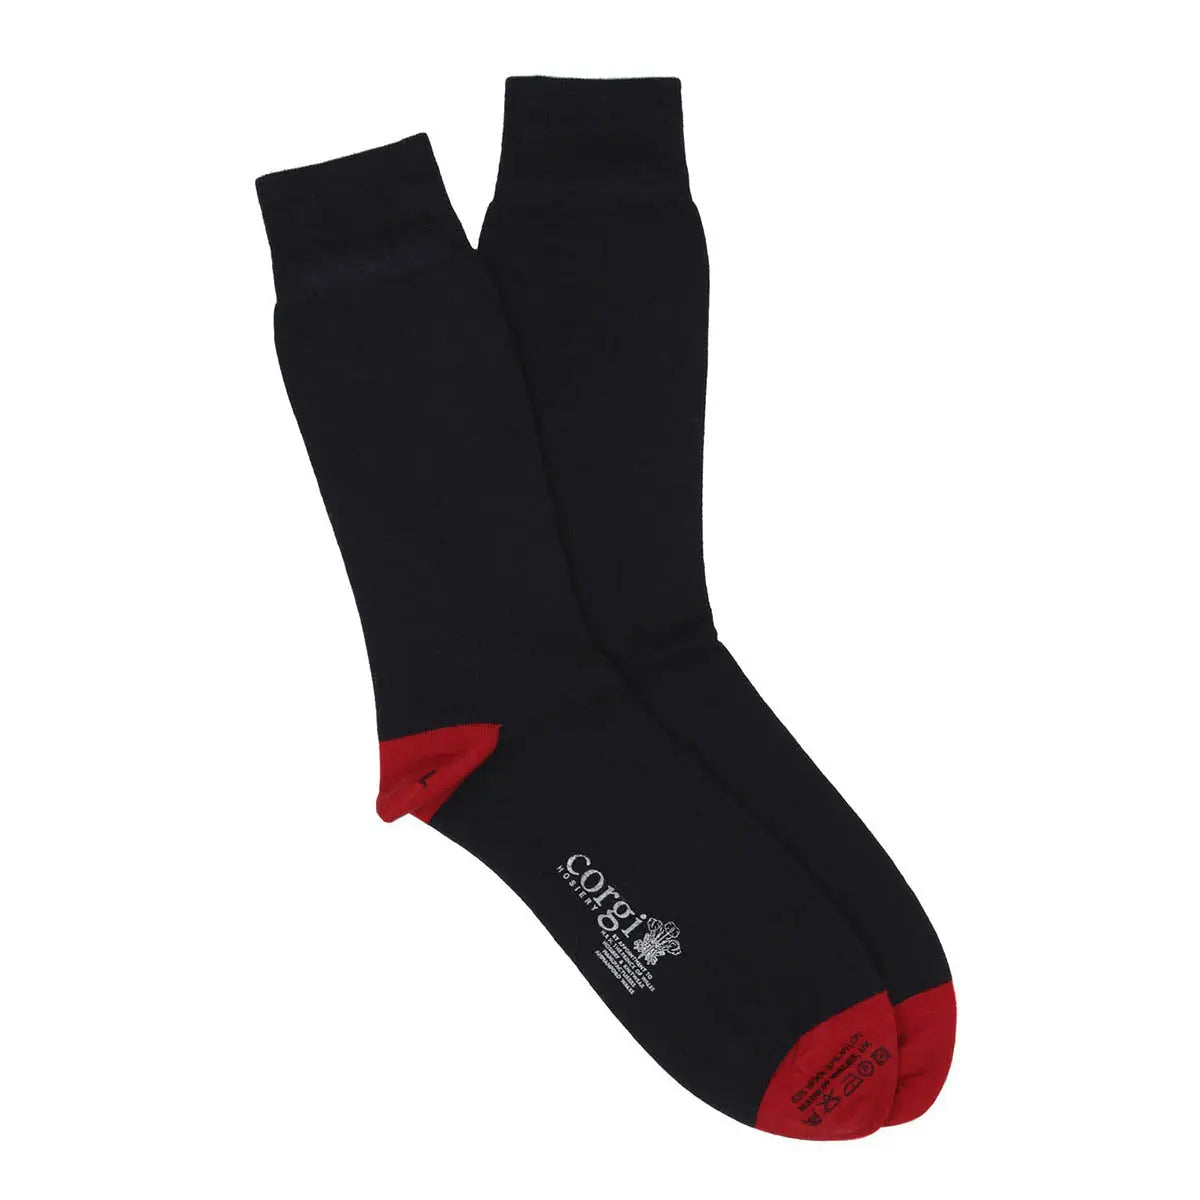 ‘Contrast Heel & Toe’ Merino Wool Socks  Robert Old   